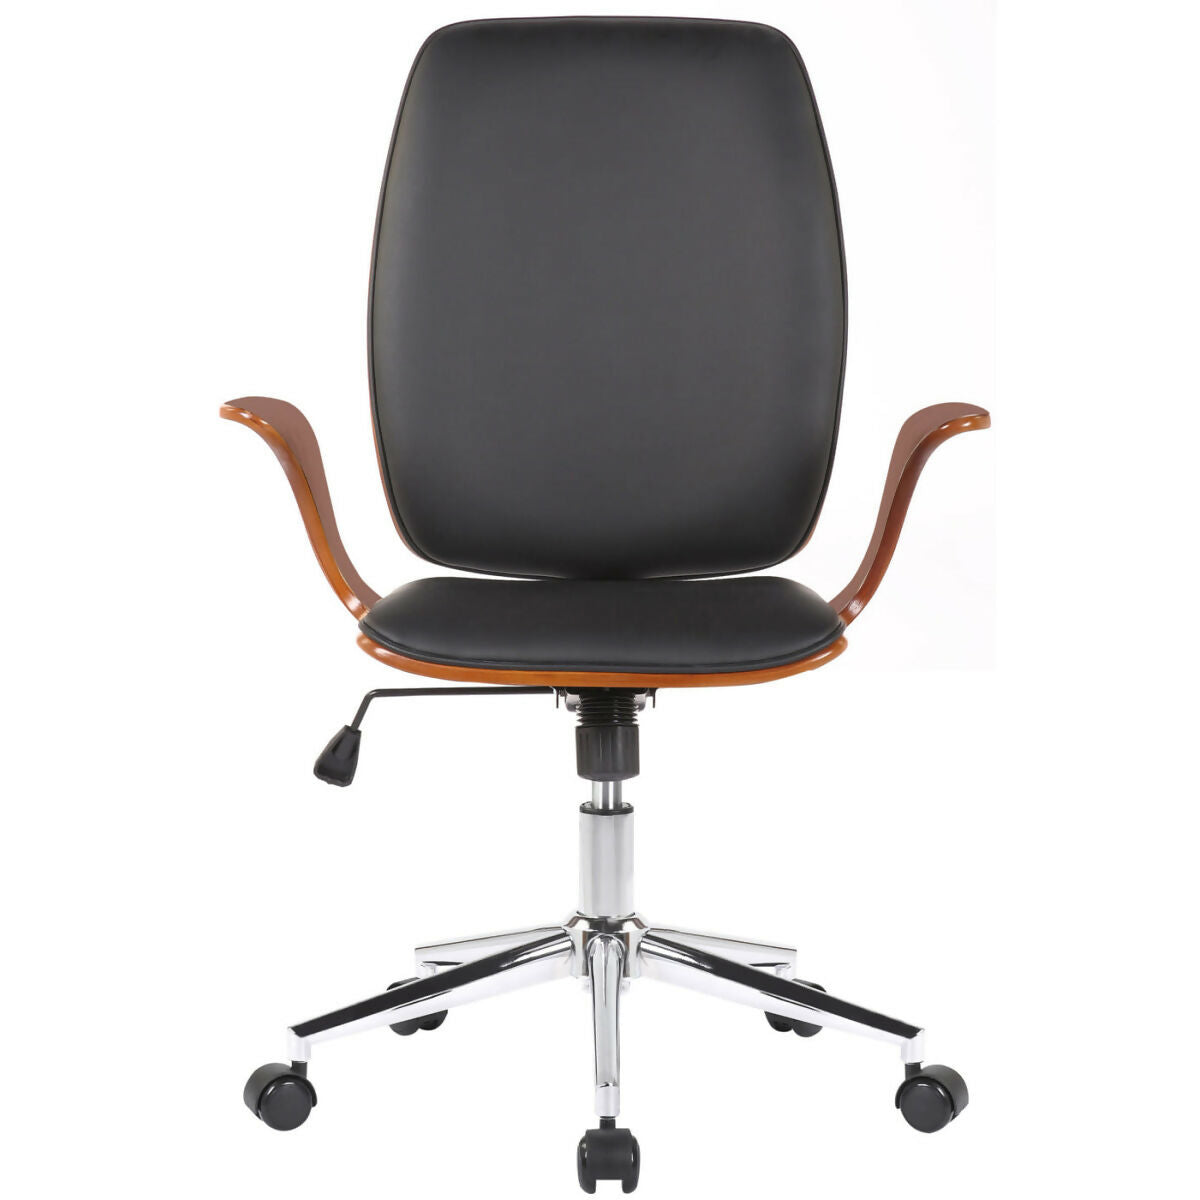 Burbank office chair - Walnut - Black - 0